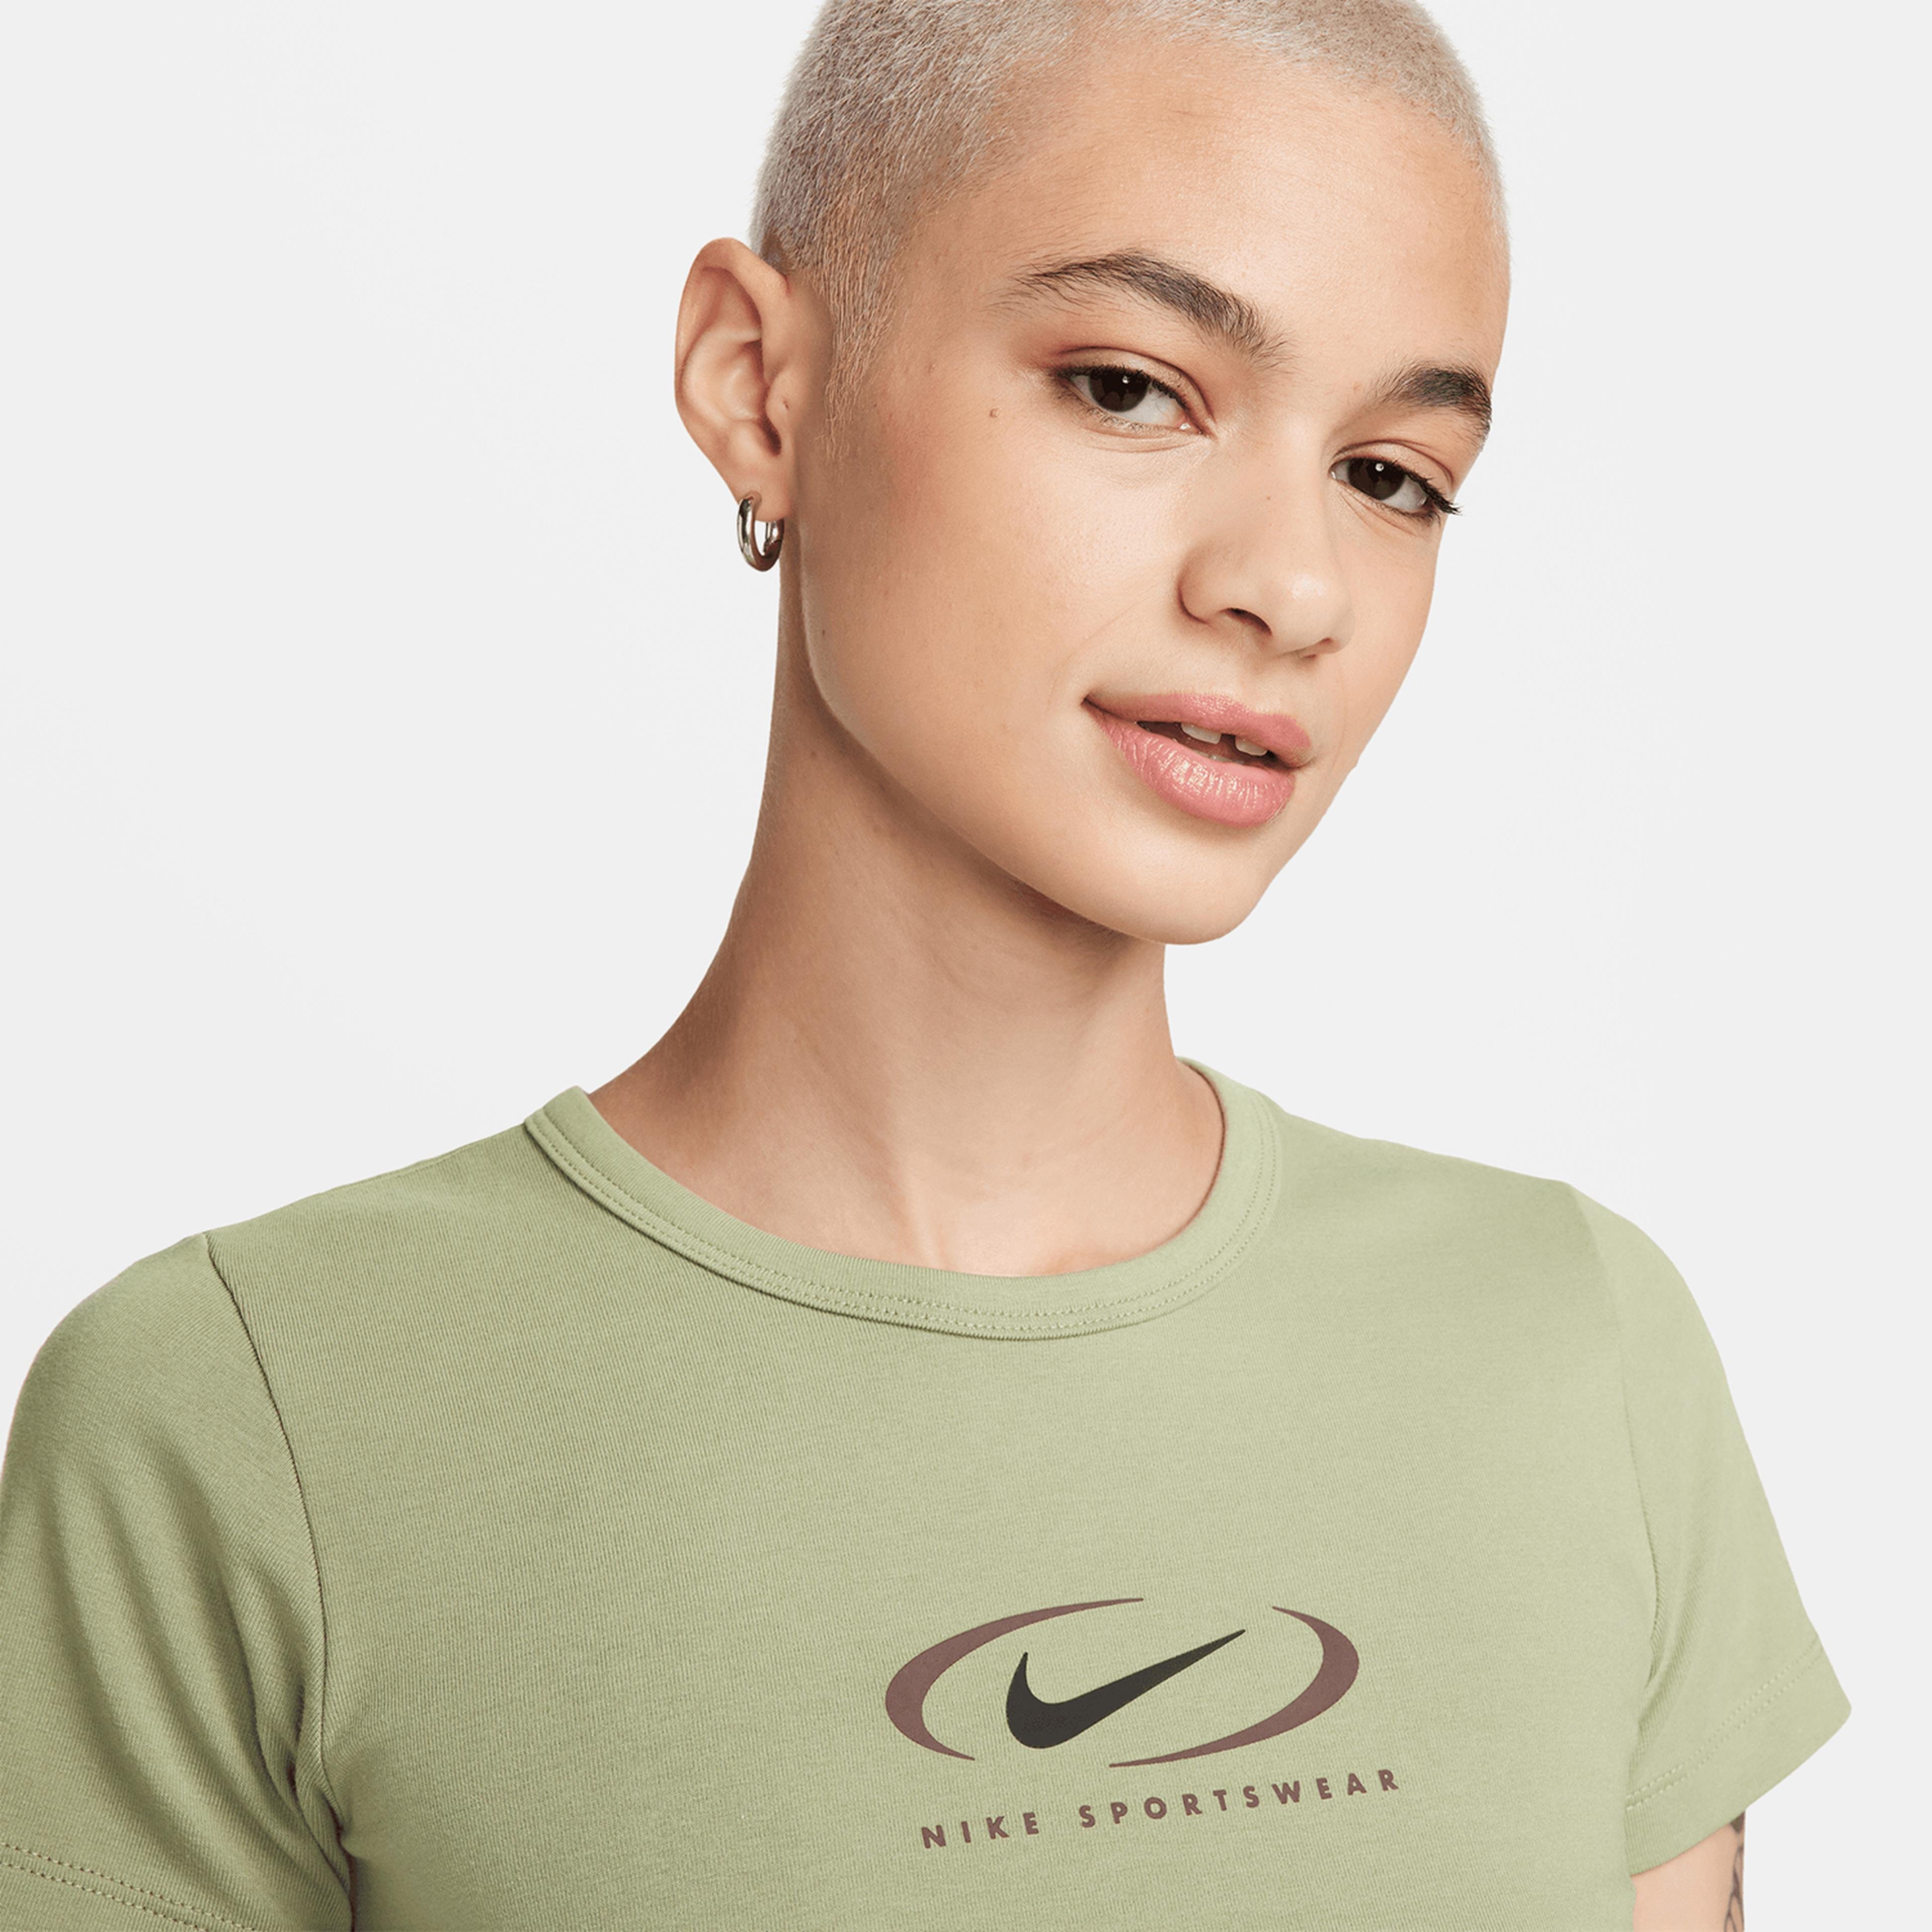 Nike Sportswear Bby Tee Swsh Kadın Yeşil T-Shirt